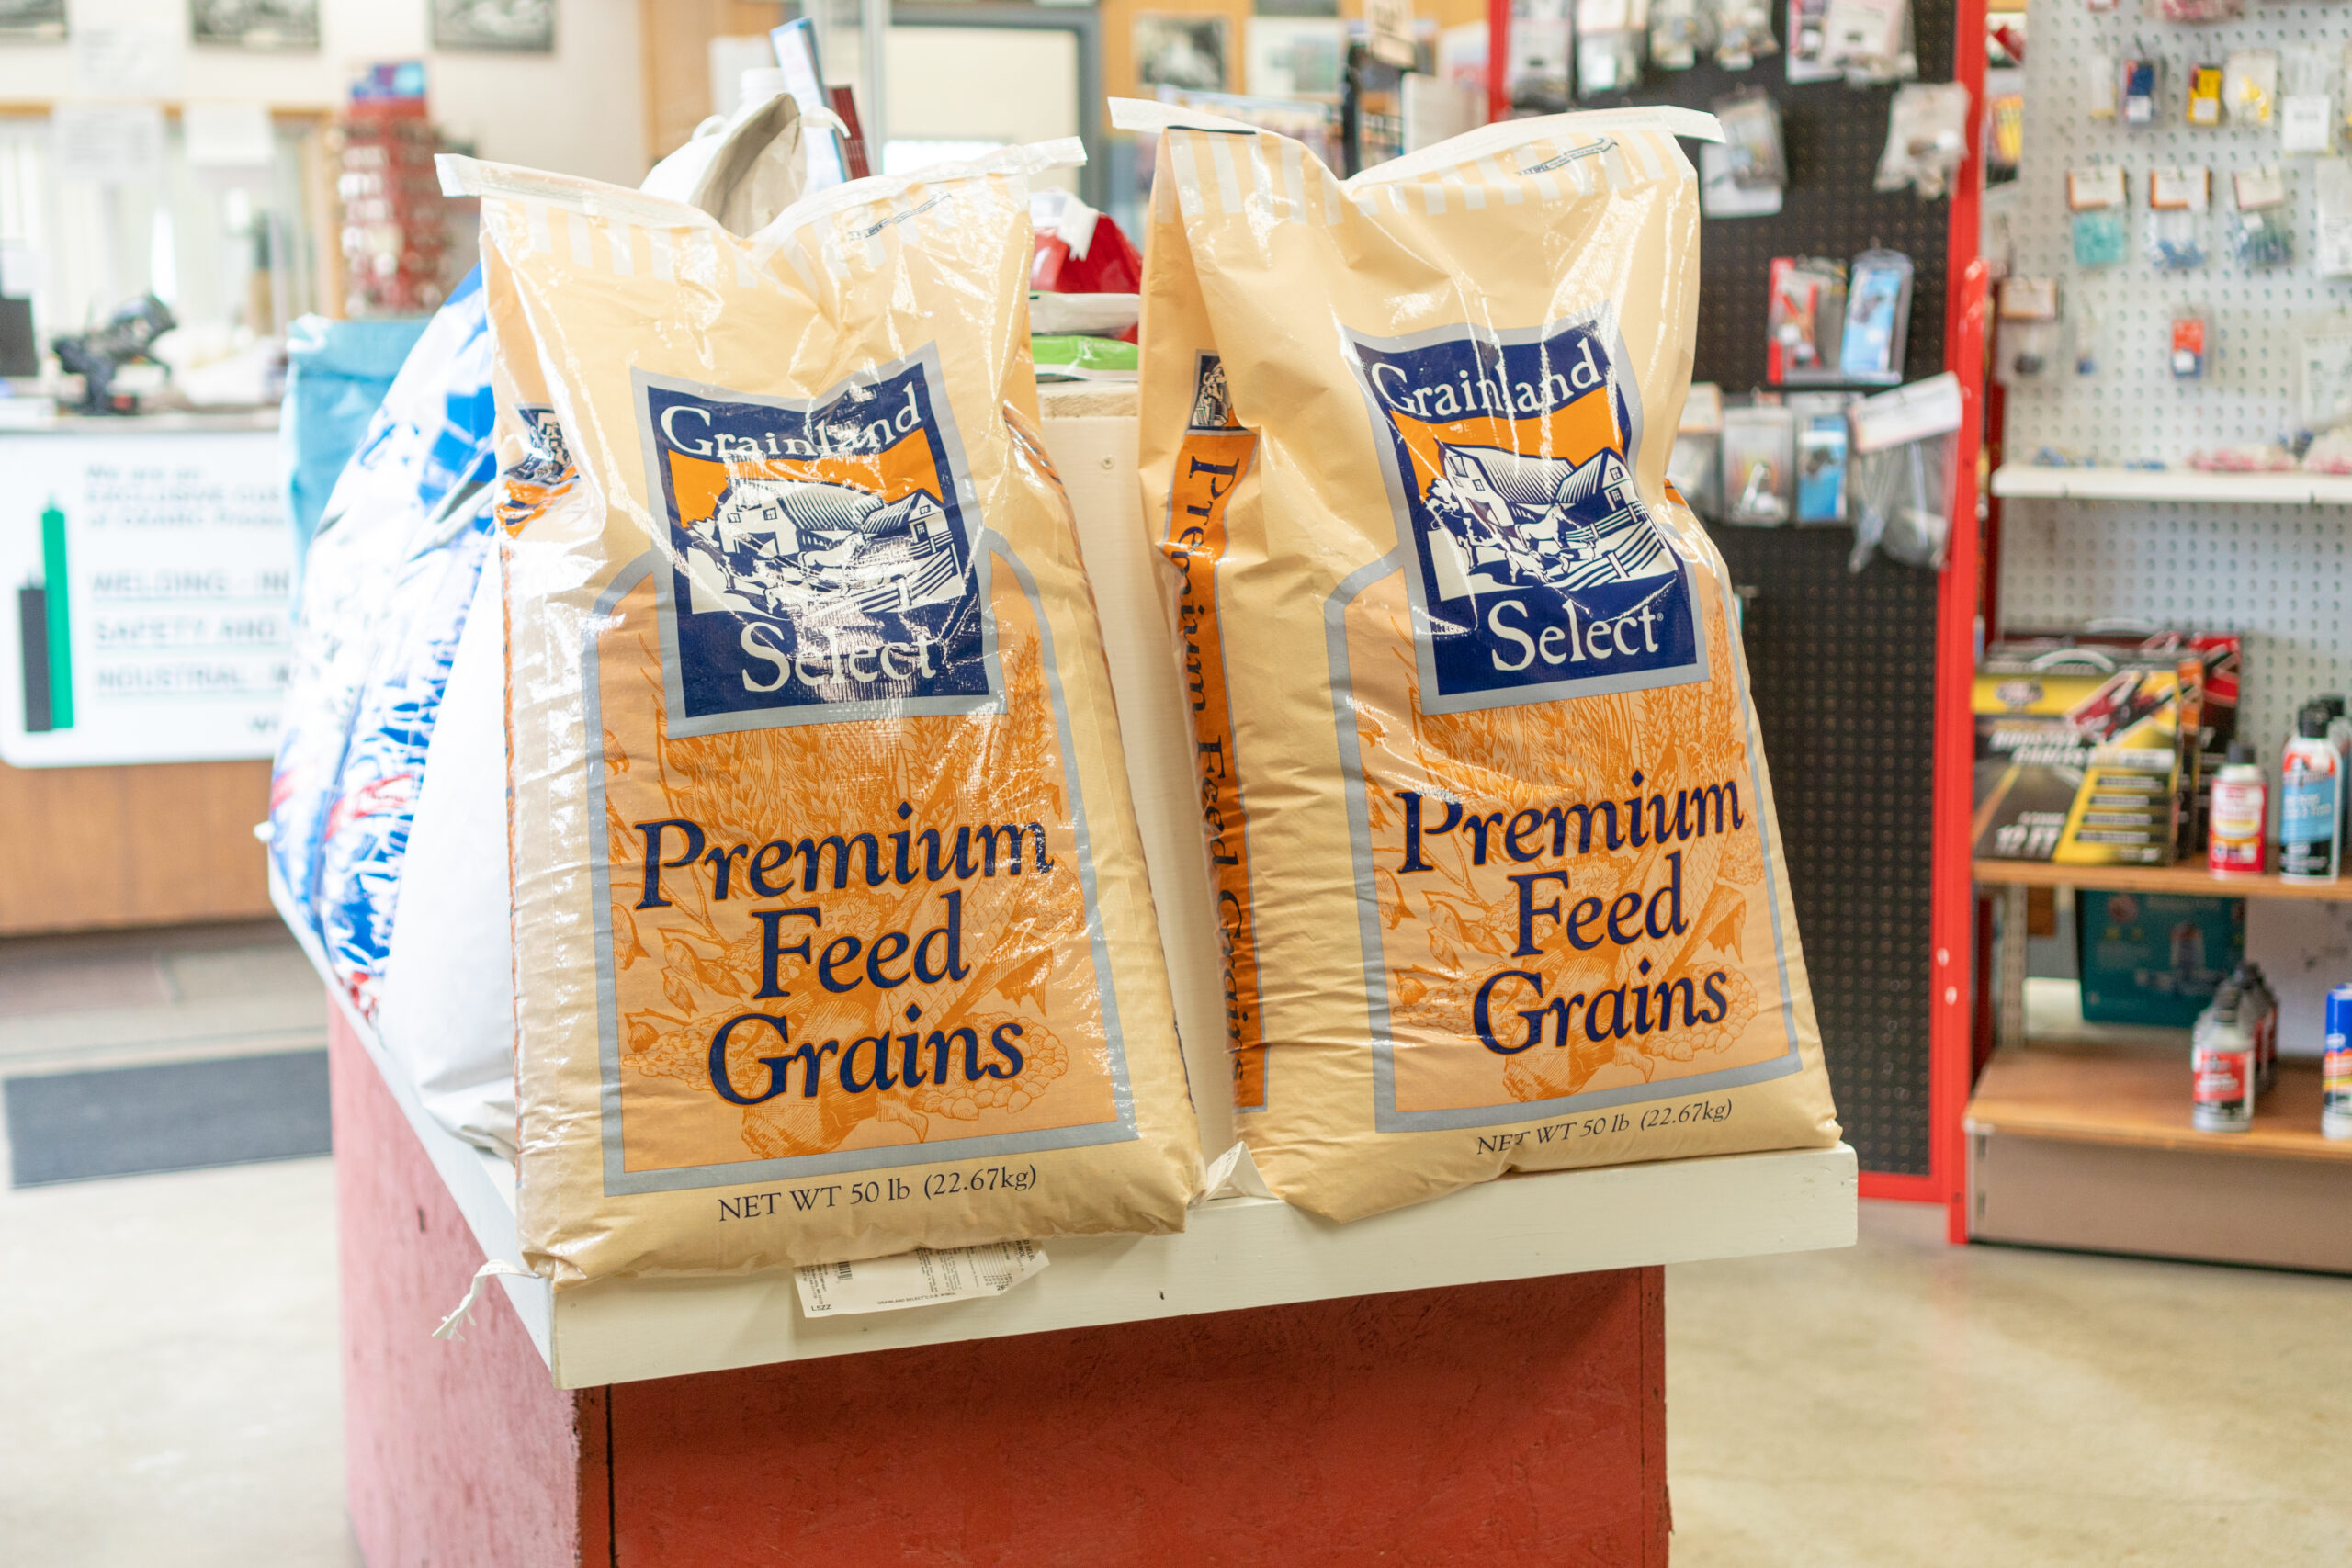 Grainland Select Premium Feed Grains